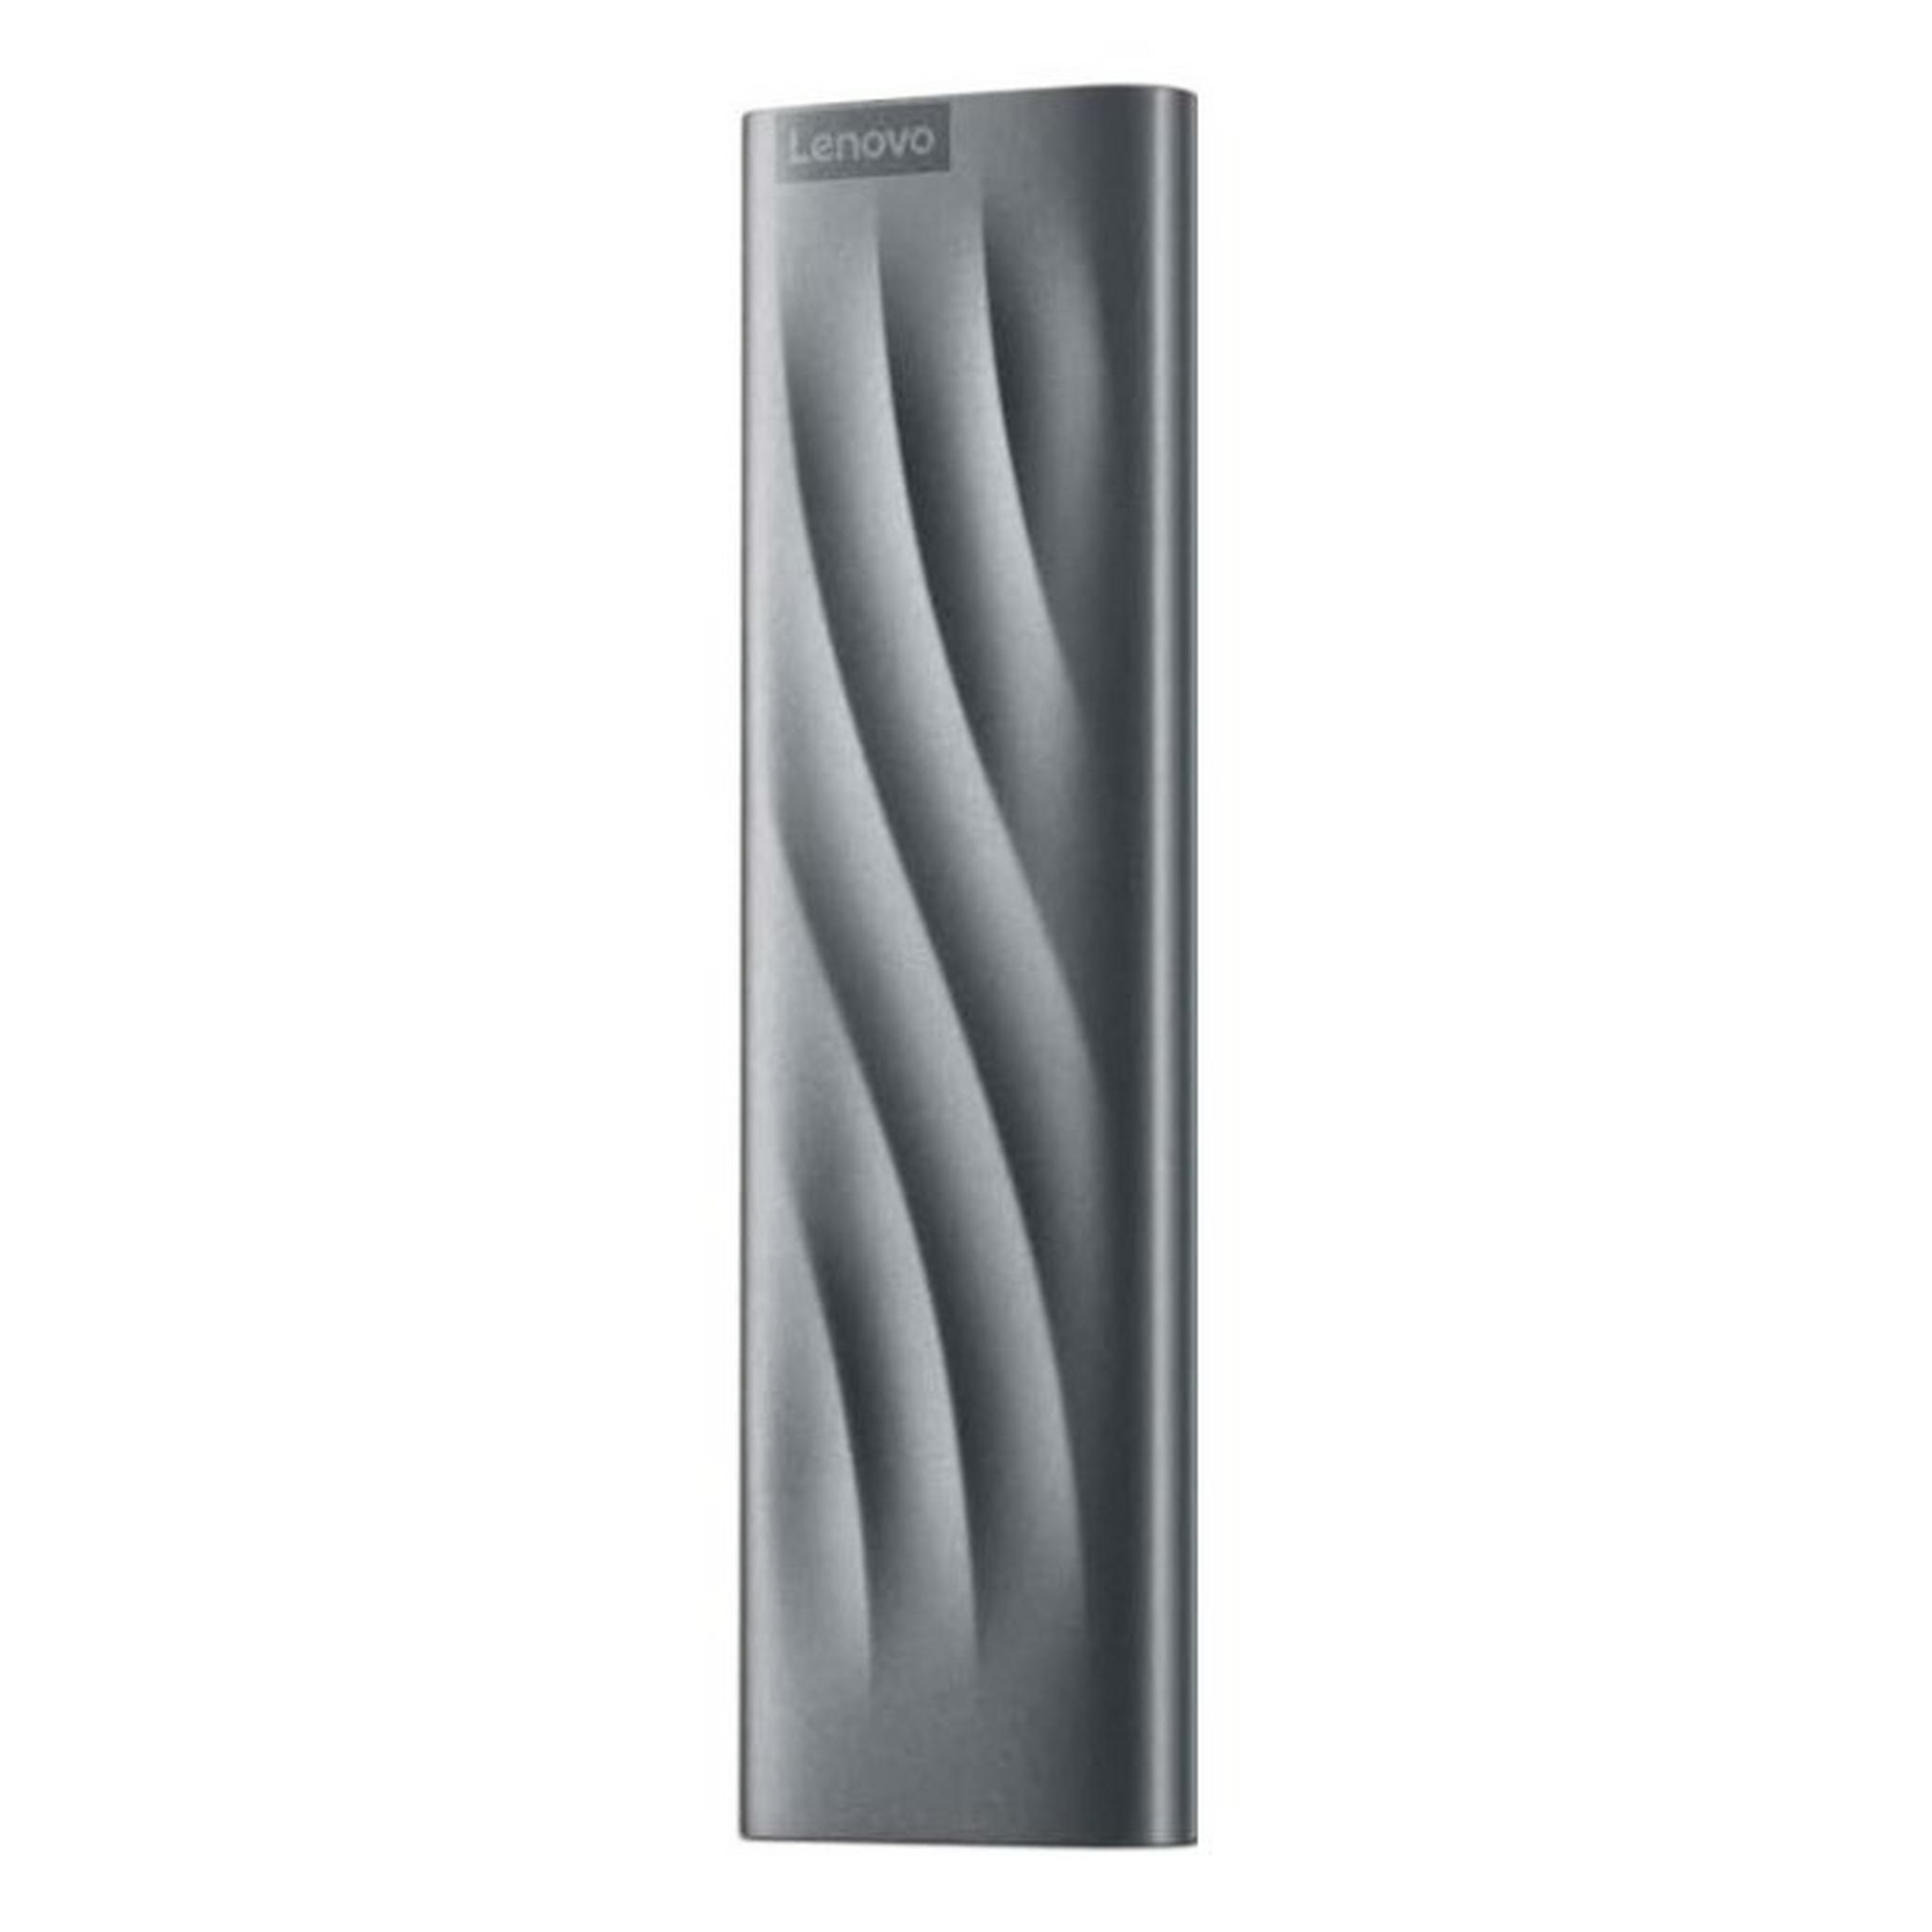 Lenovo PS8 Portable Hard Drive, 2TB SSD, GXB1M24161 – Silver